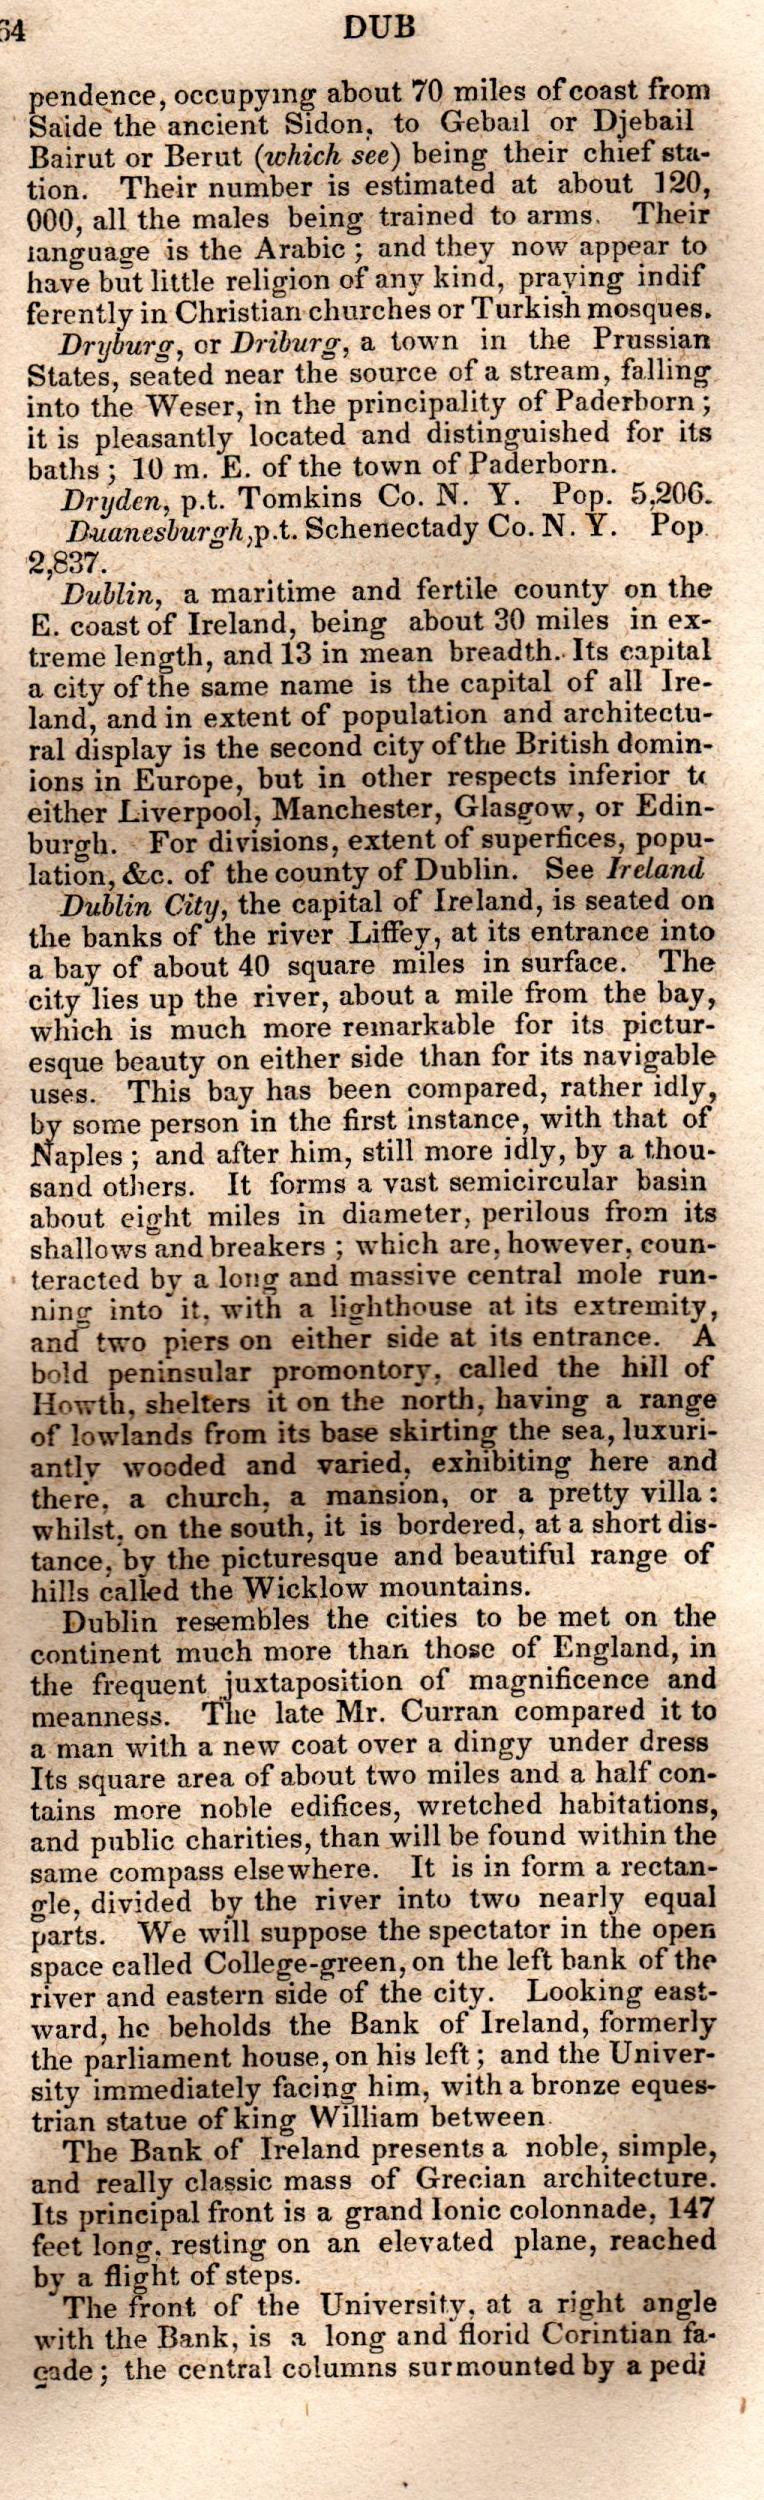 Brookes’ Universal Gazetteer (1850), Page 264 Right Column